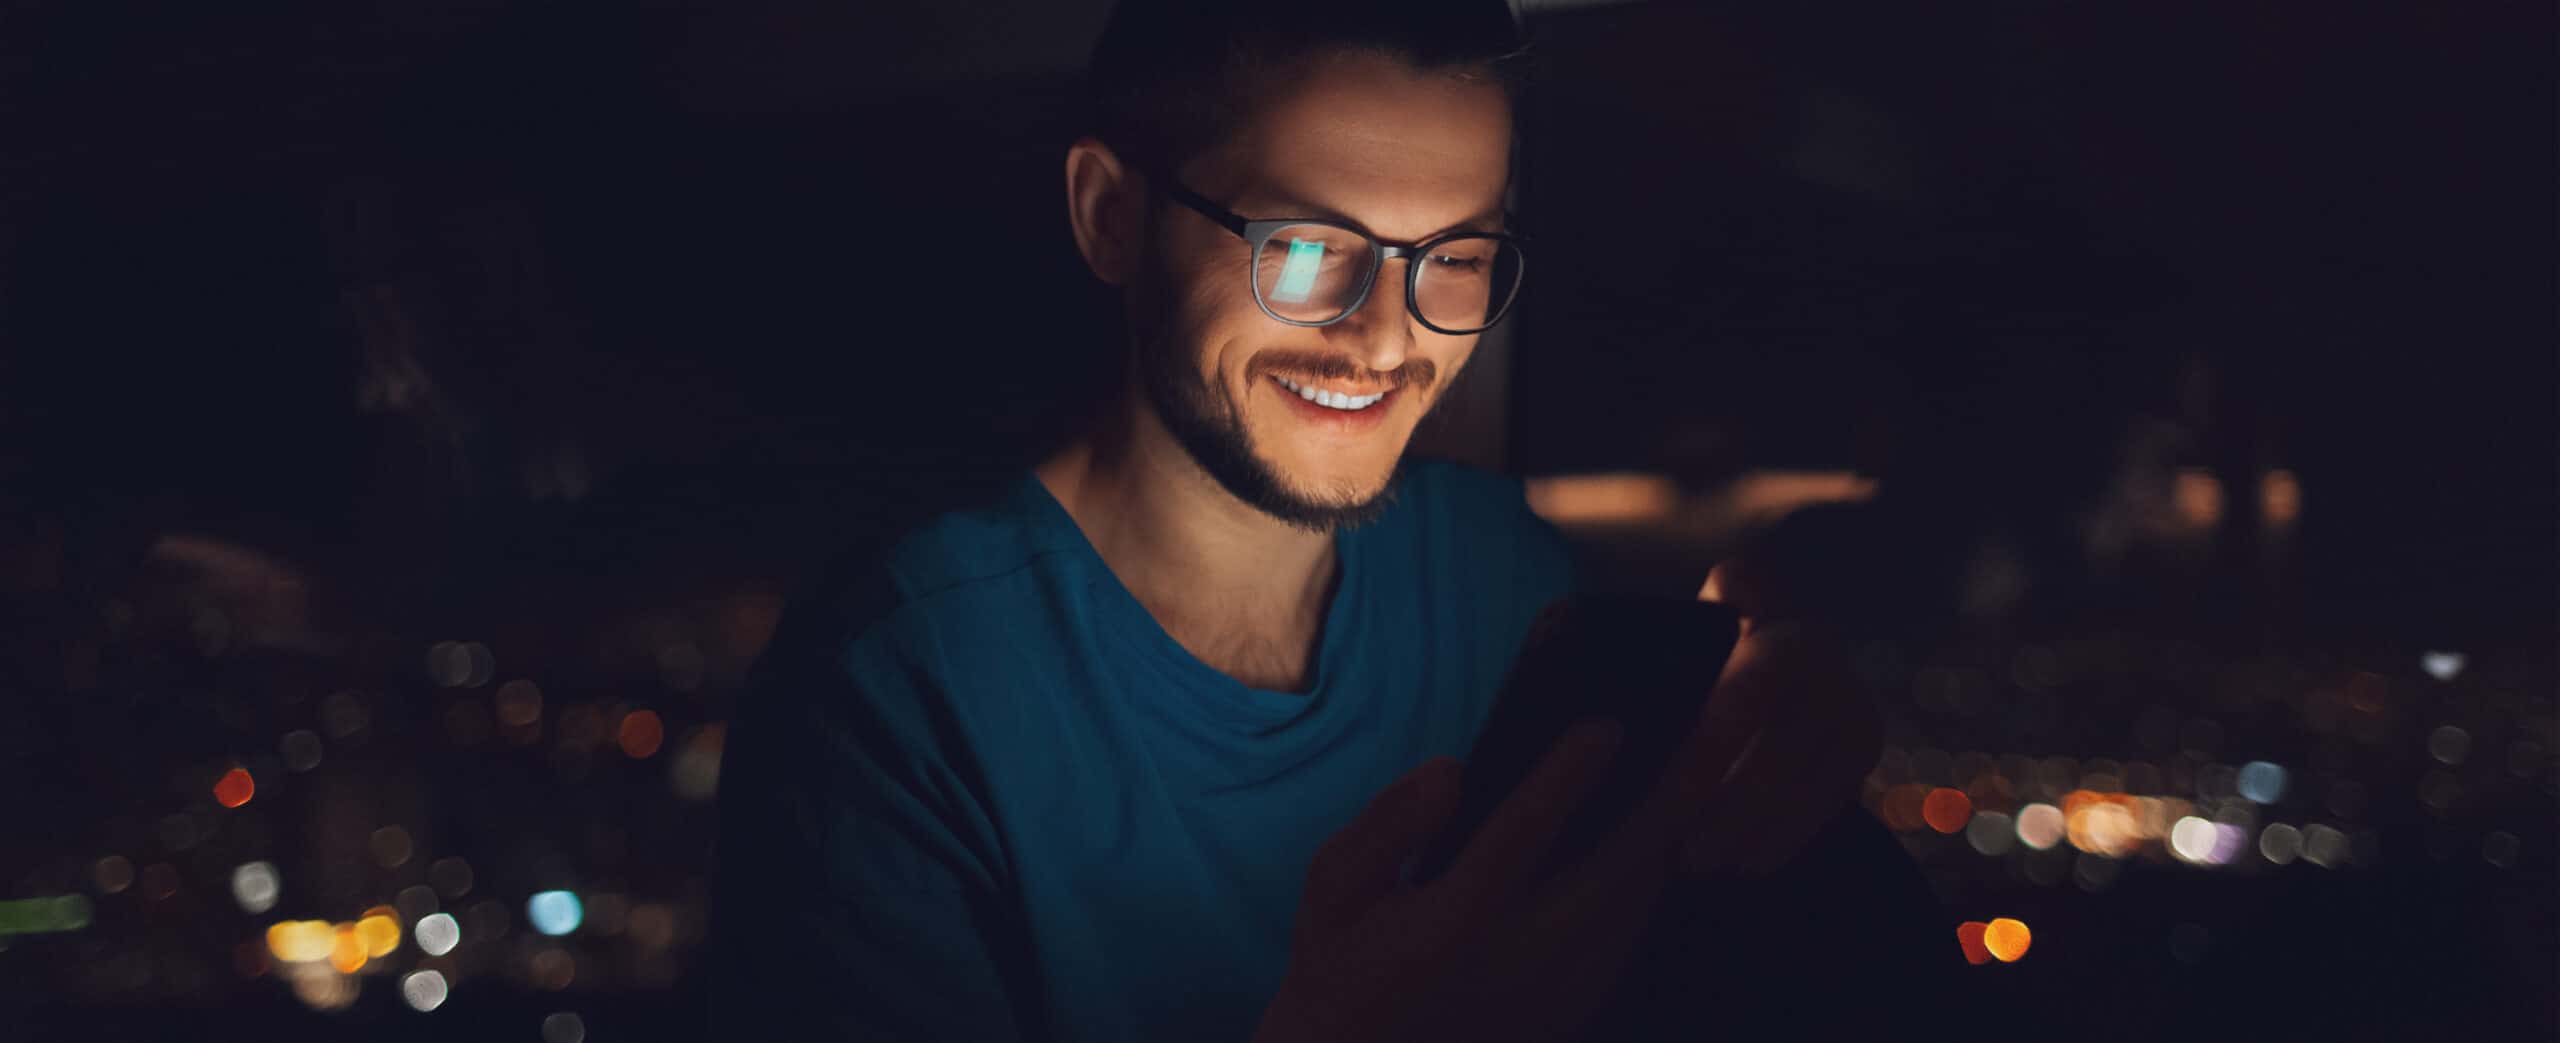 Night portrait of smiling man using smartphone near window